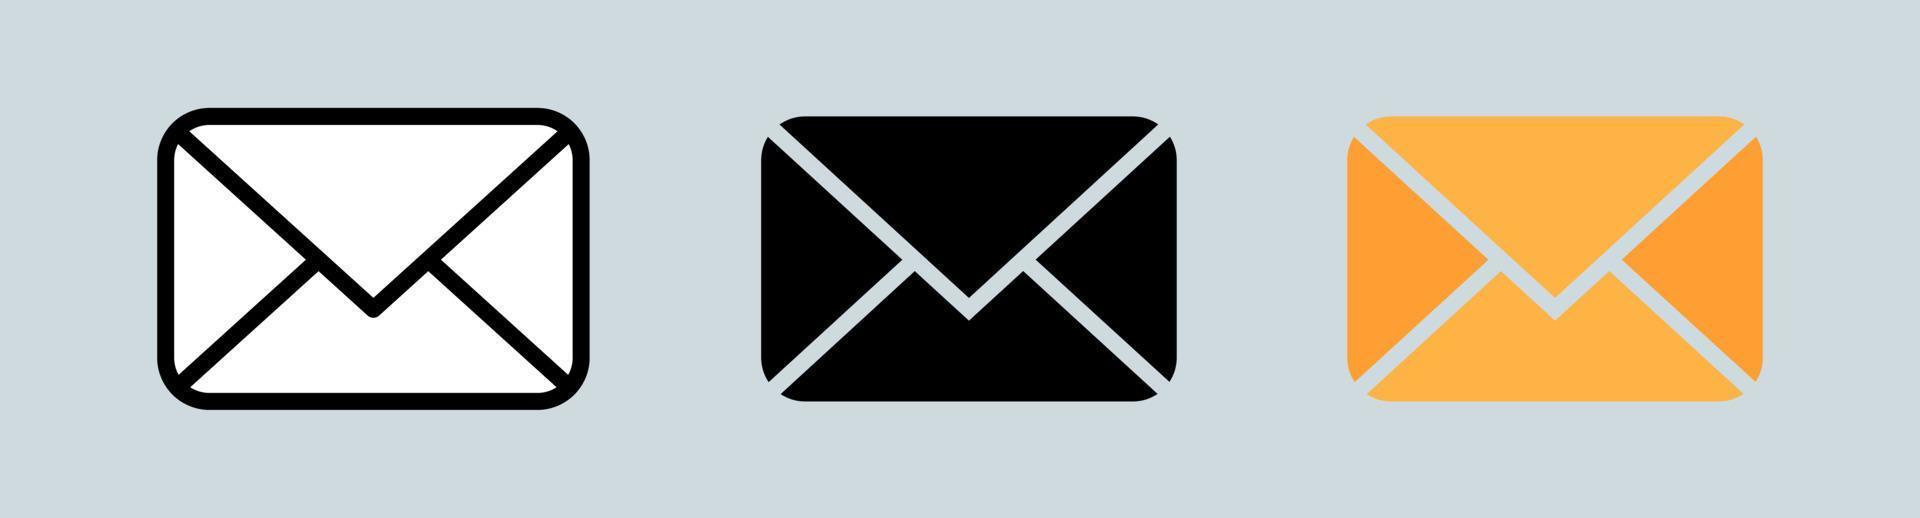 Vector black and white envelope icon. Set of envelopes icons.